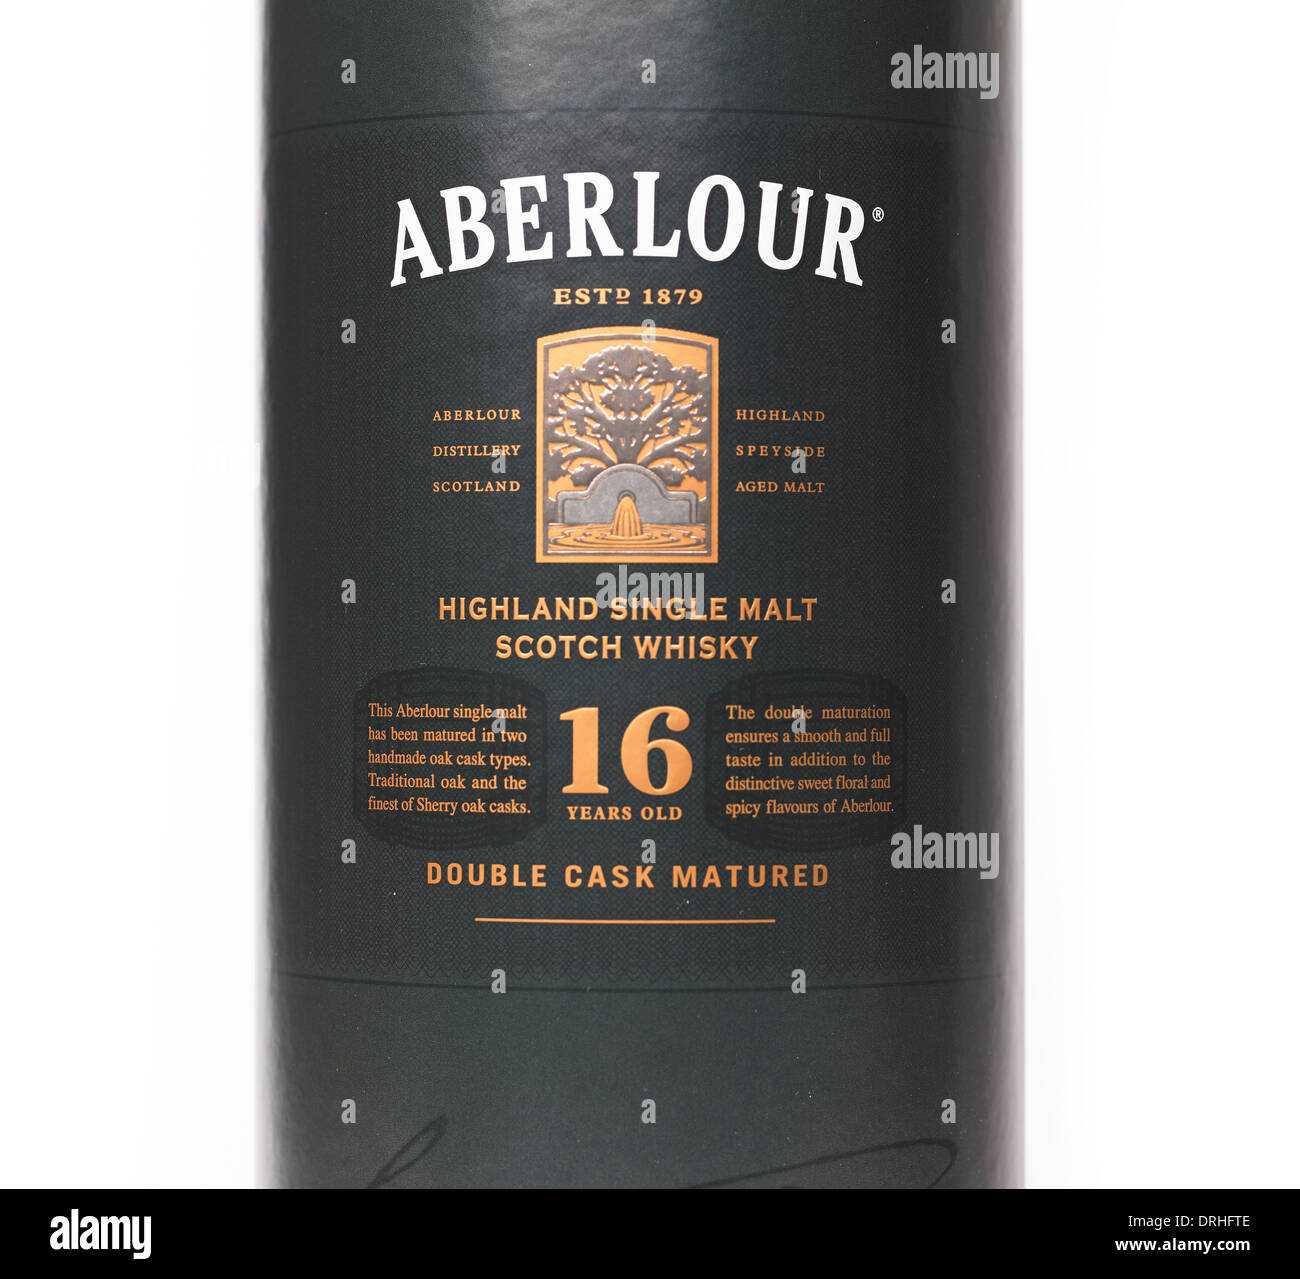 Aberlour 16 years old Scotch Whisky carton Stock Photo - Alamy